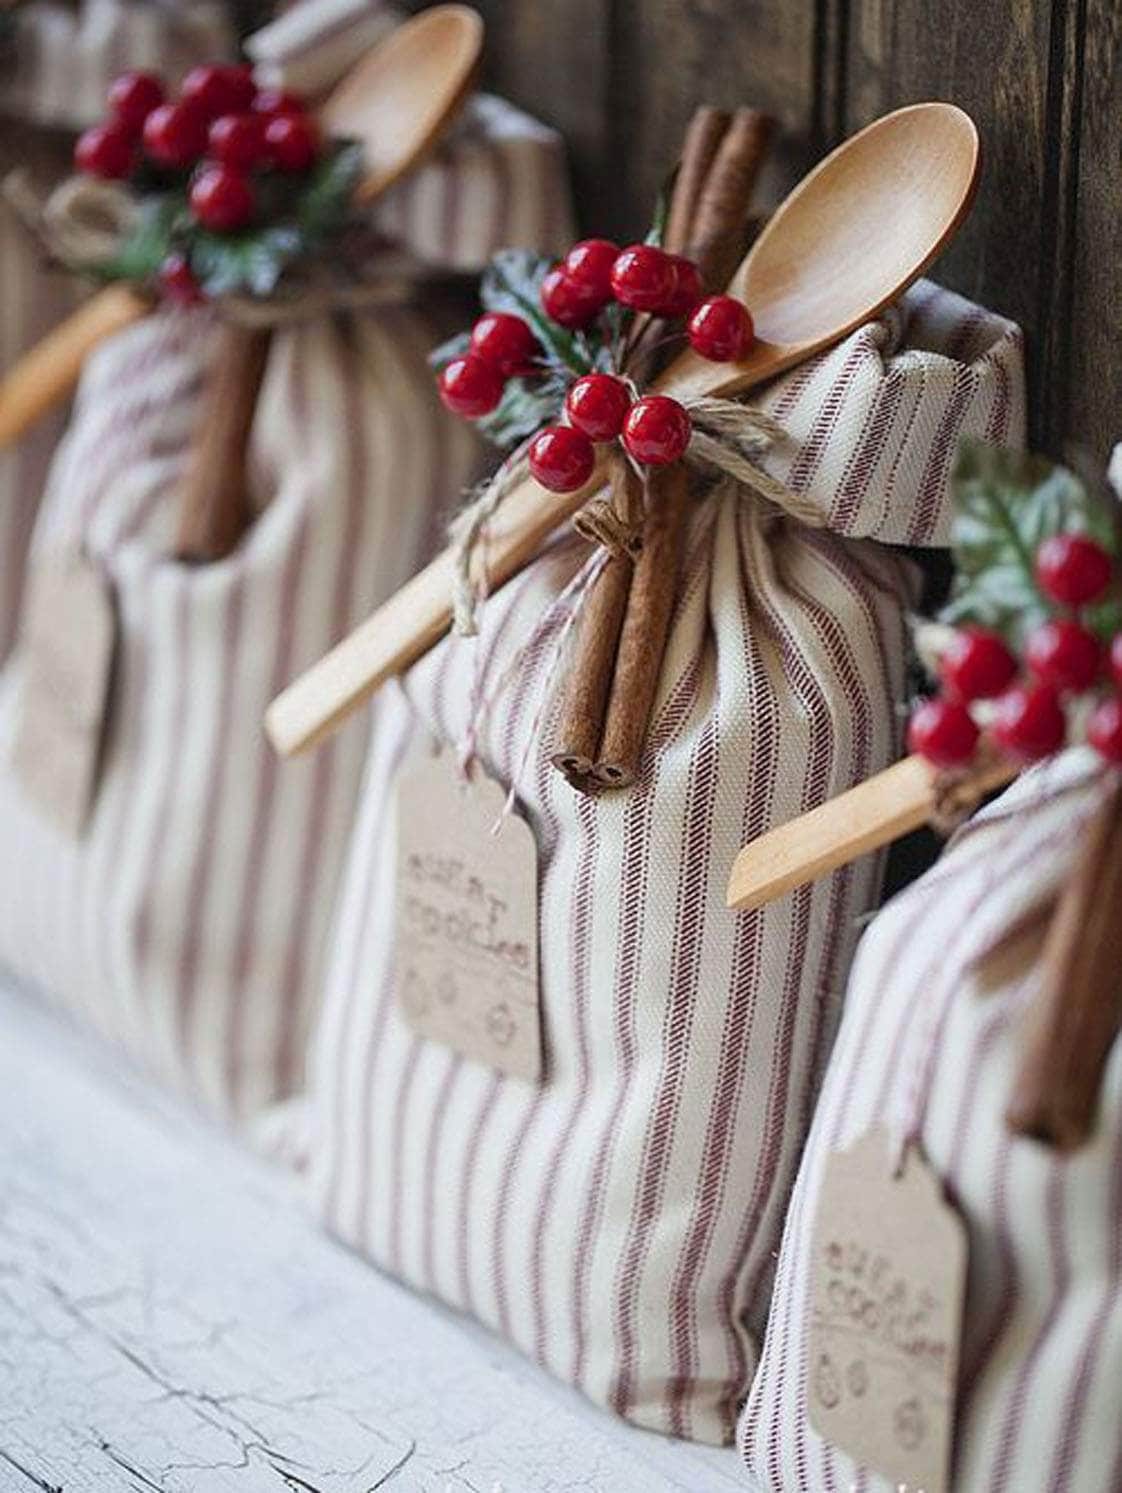 Ticking stripe gift sacks with tags and cinnamon stick embellishment.